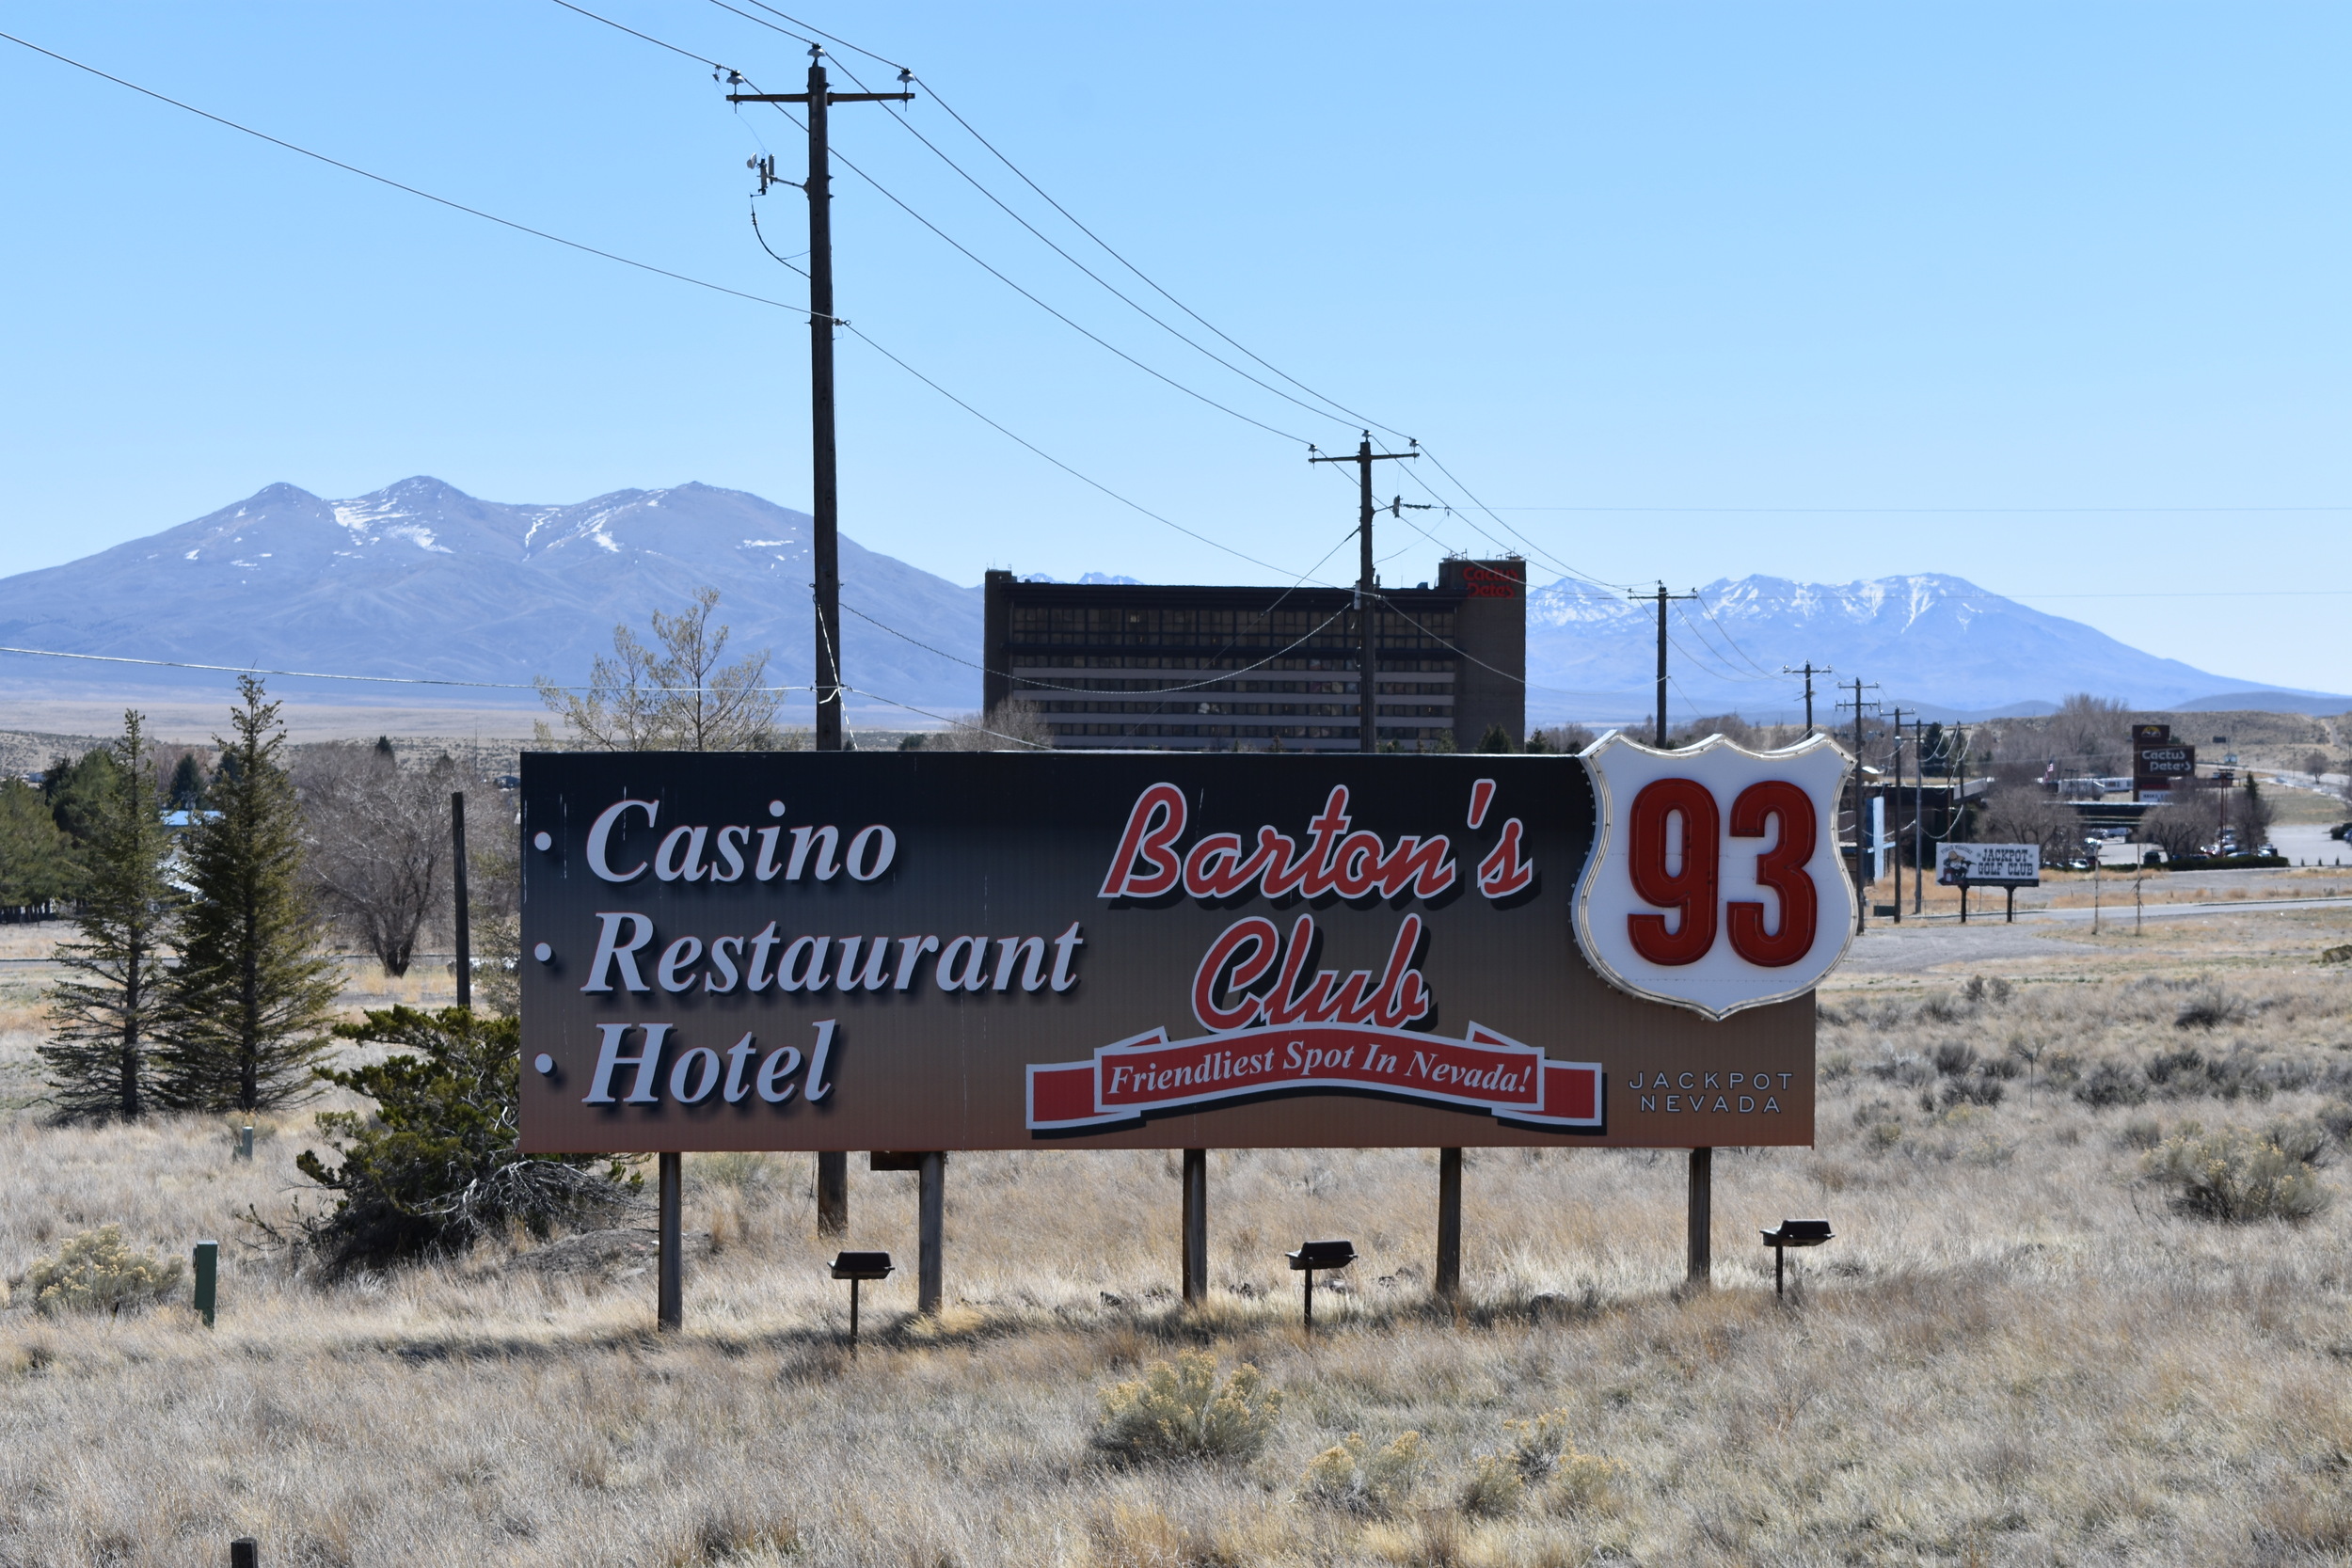 Barton's Club 93 mounted sign, Jackpot, Nevada